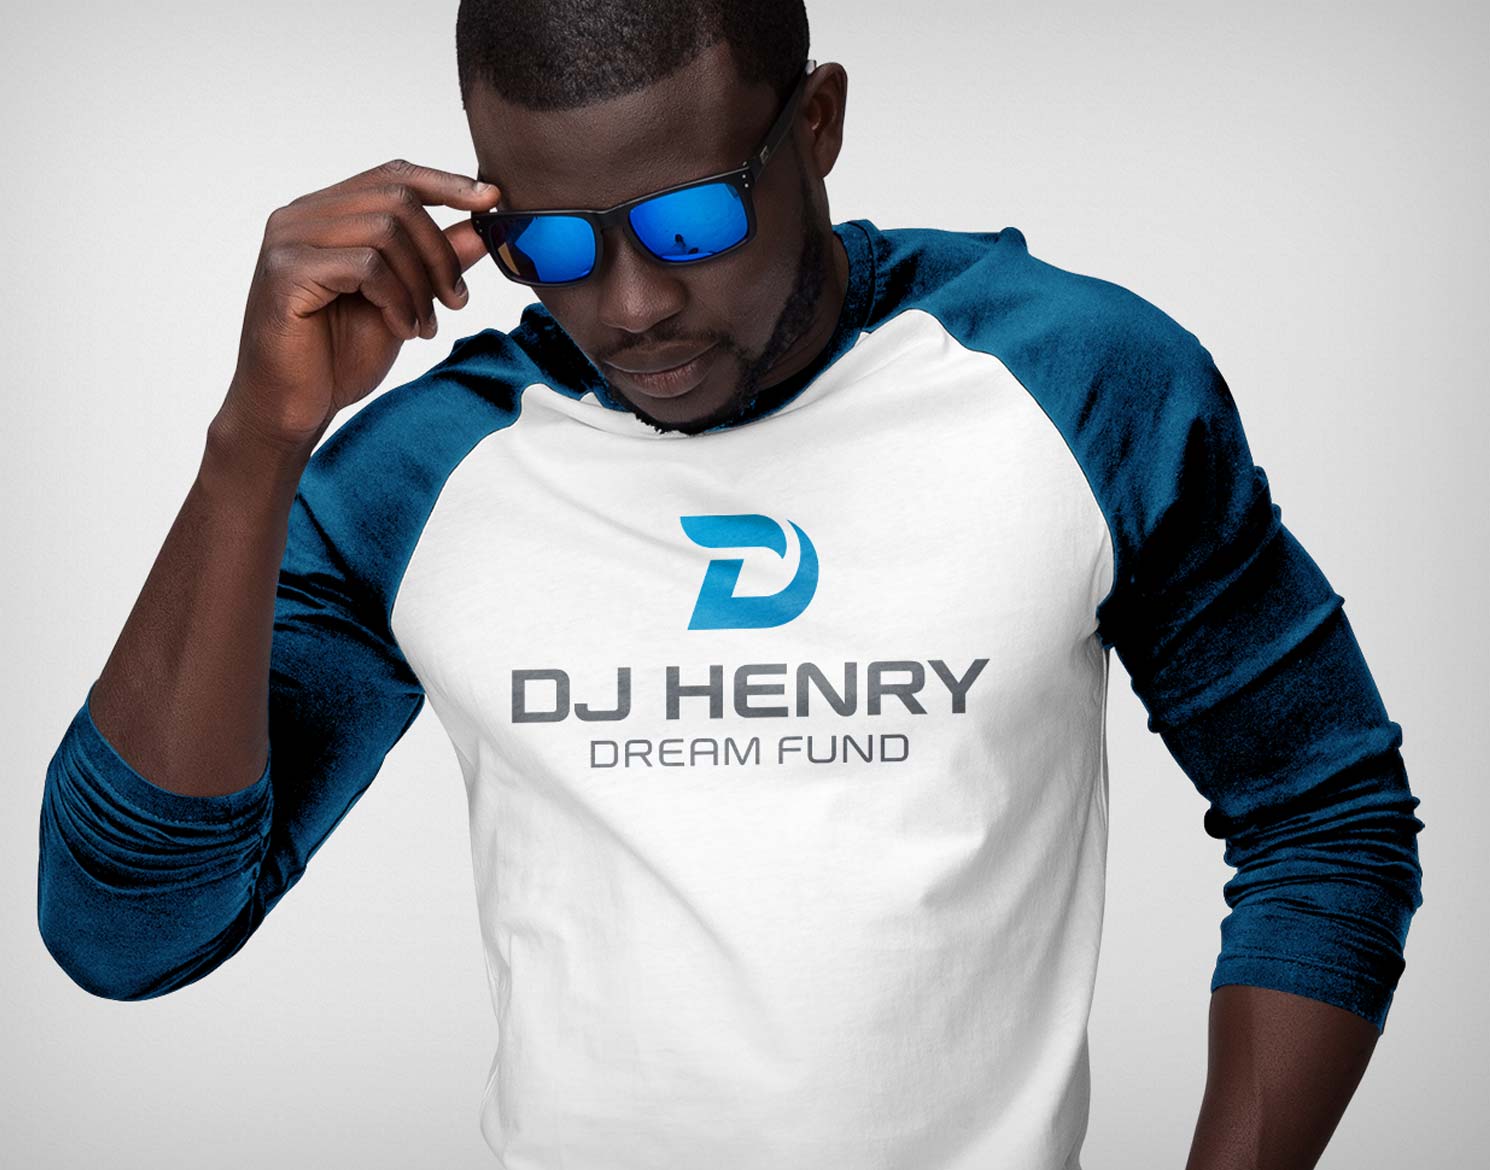 Man wearing sunglasses and baseball tee with DJ Henry Dream Fund logo